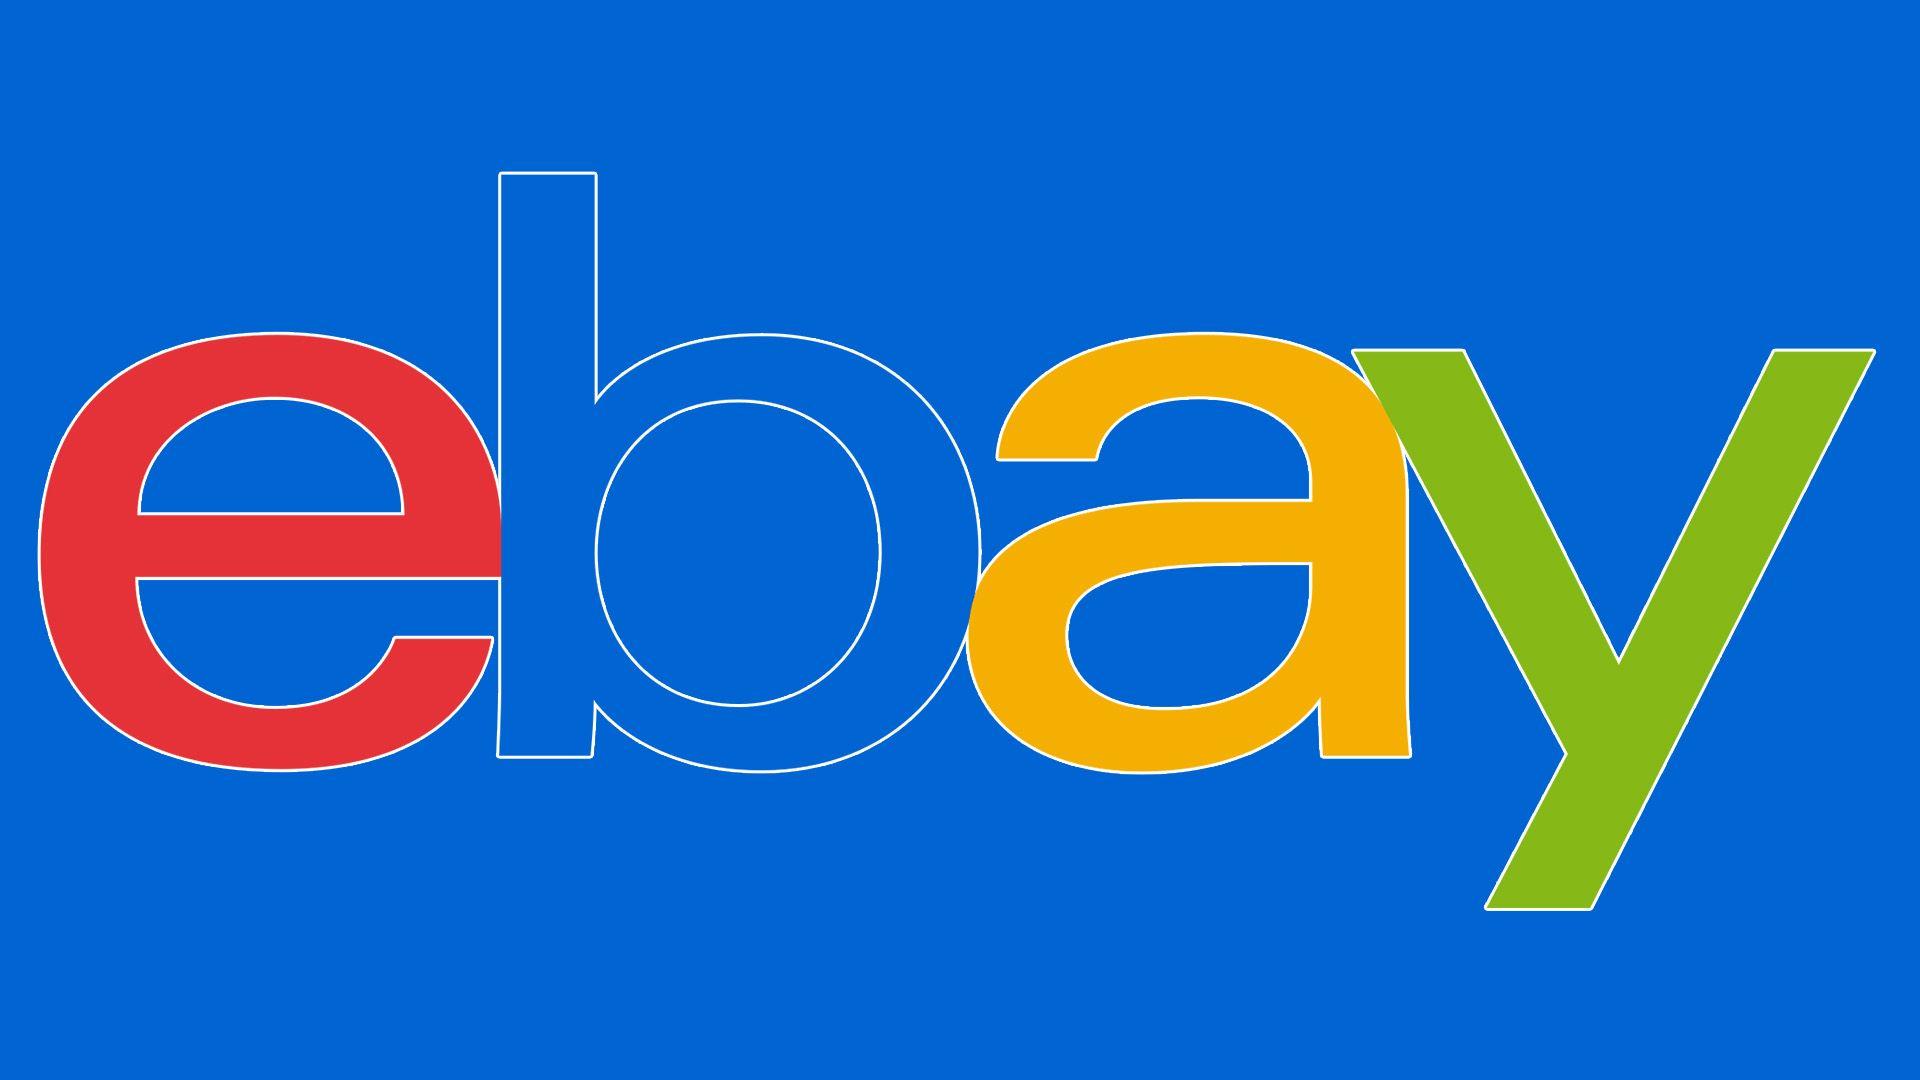 eBay Original Logo - eBay logo, symbol, meaning, History and Evolution